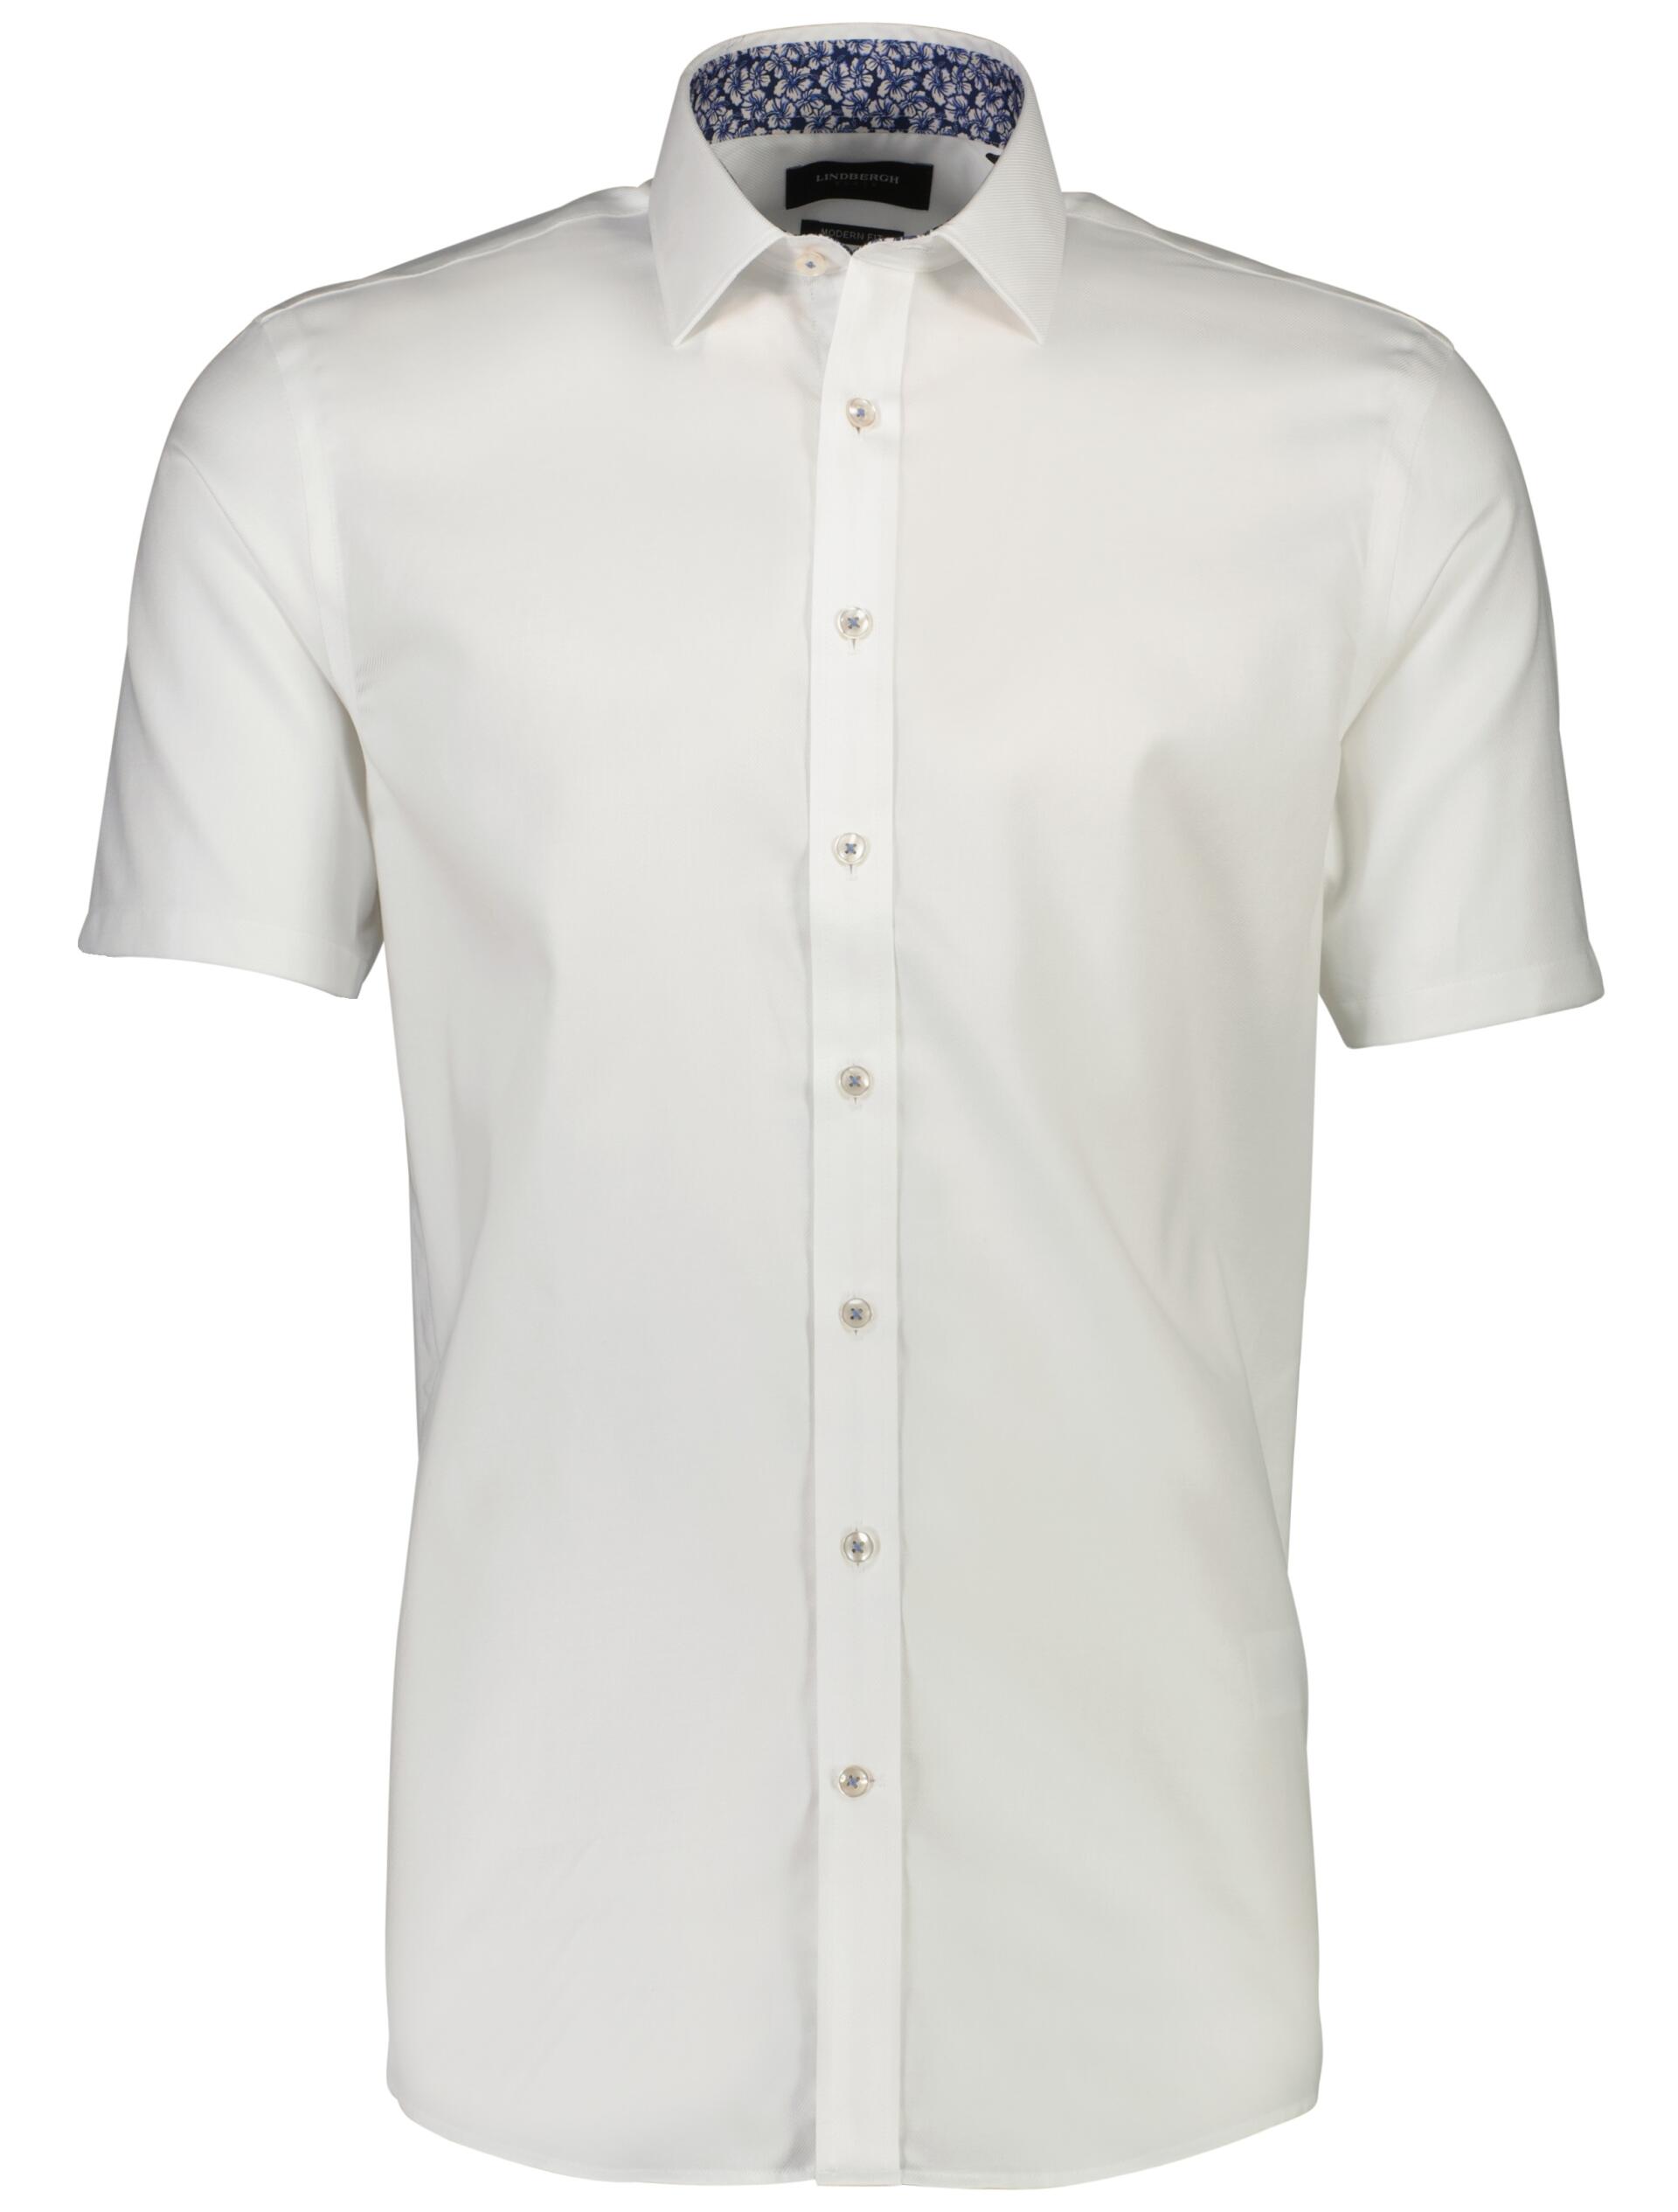 Business casual shirt 30-242135